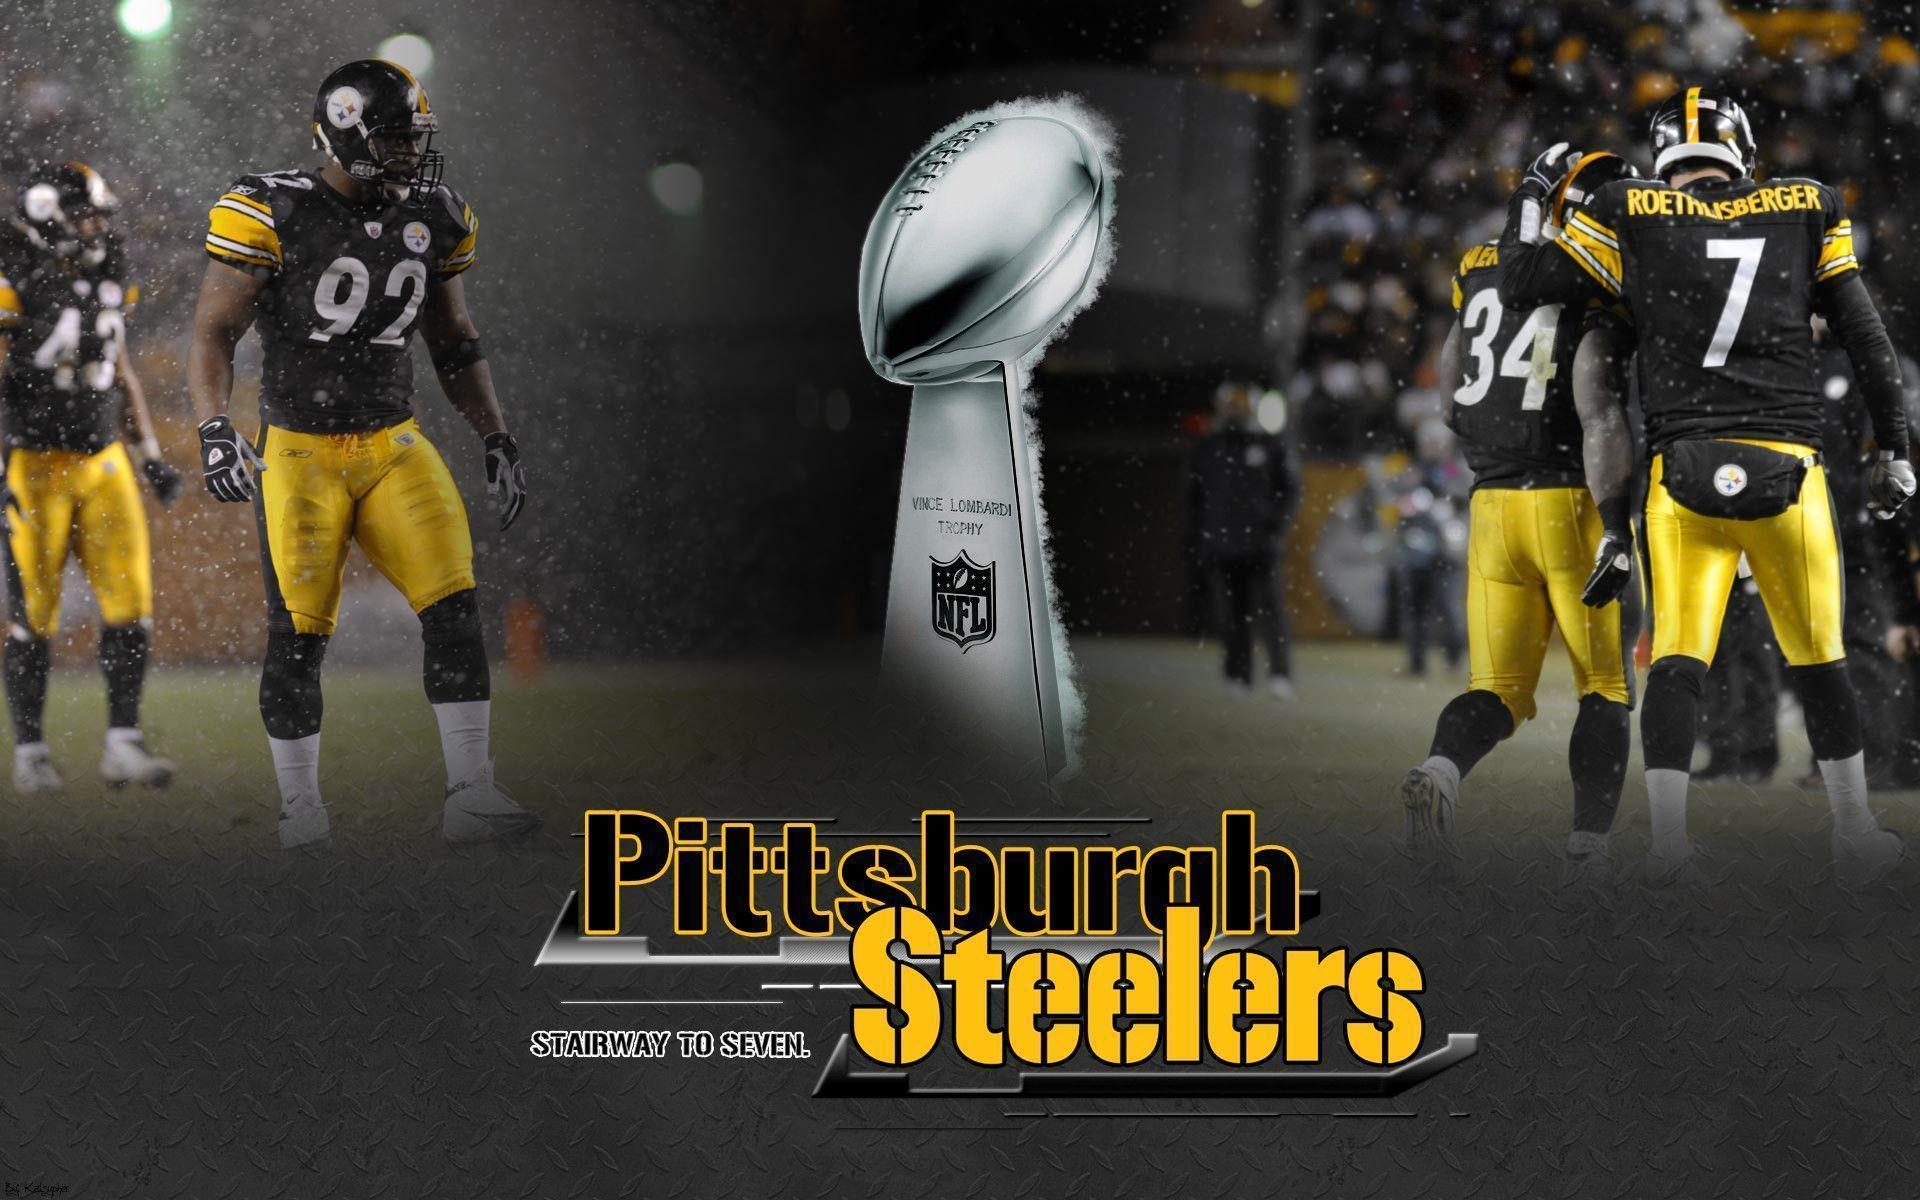 Steelers wallpaper